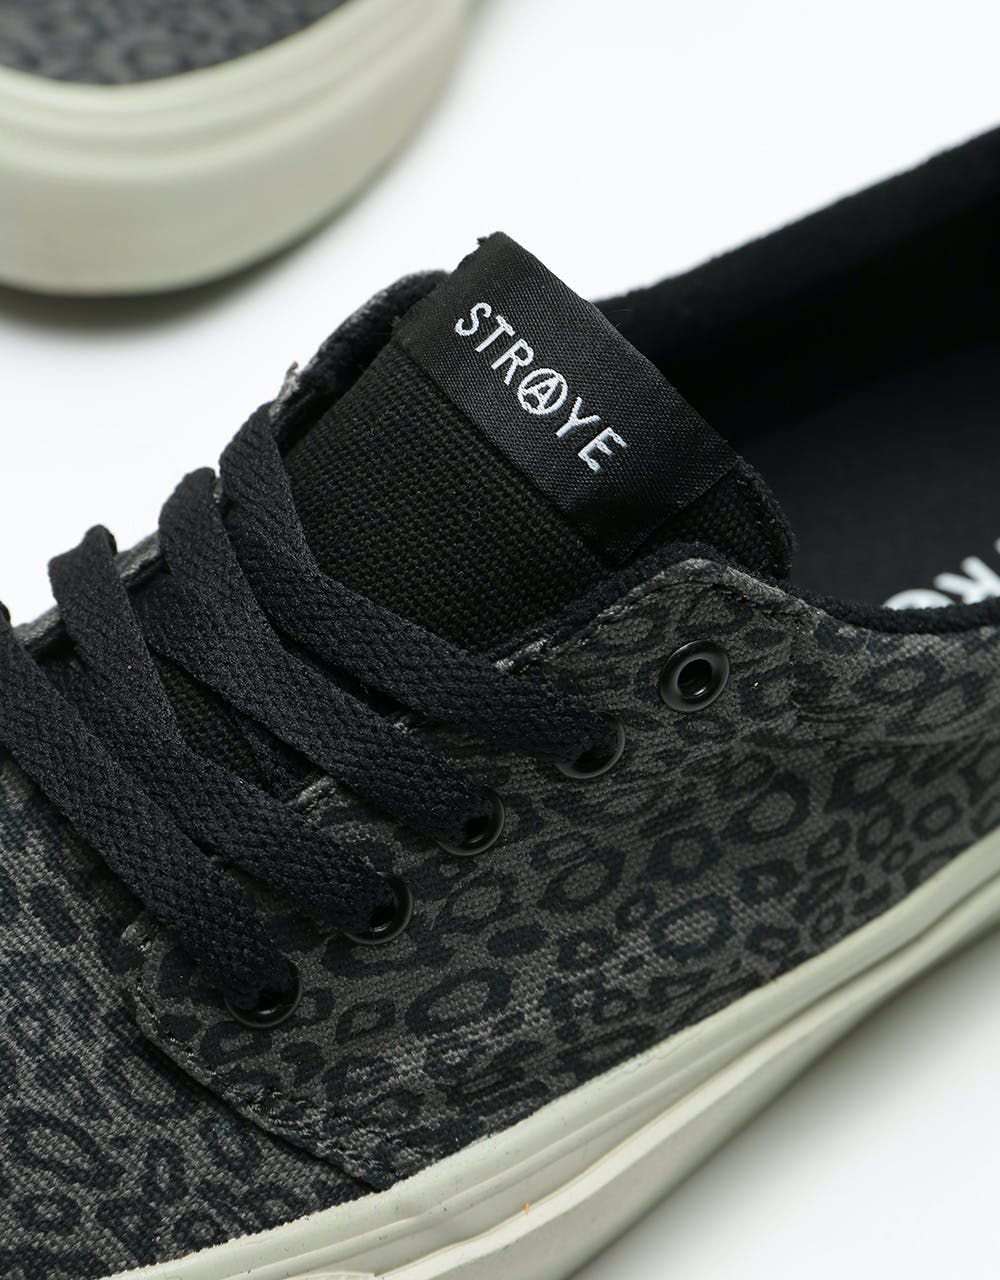 Straye Fairfax Skate Shoes - Cheetah Charcoal